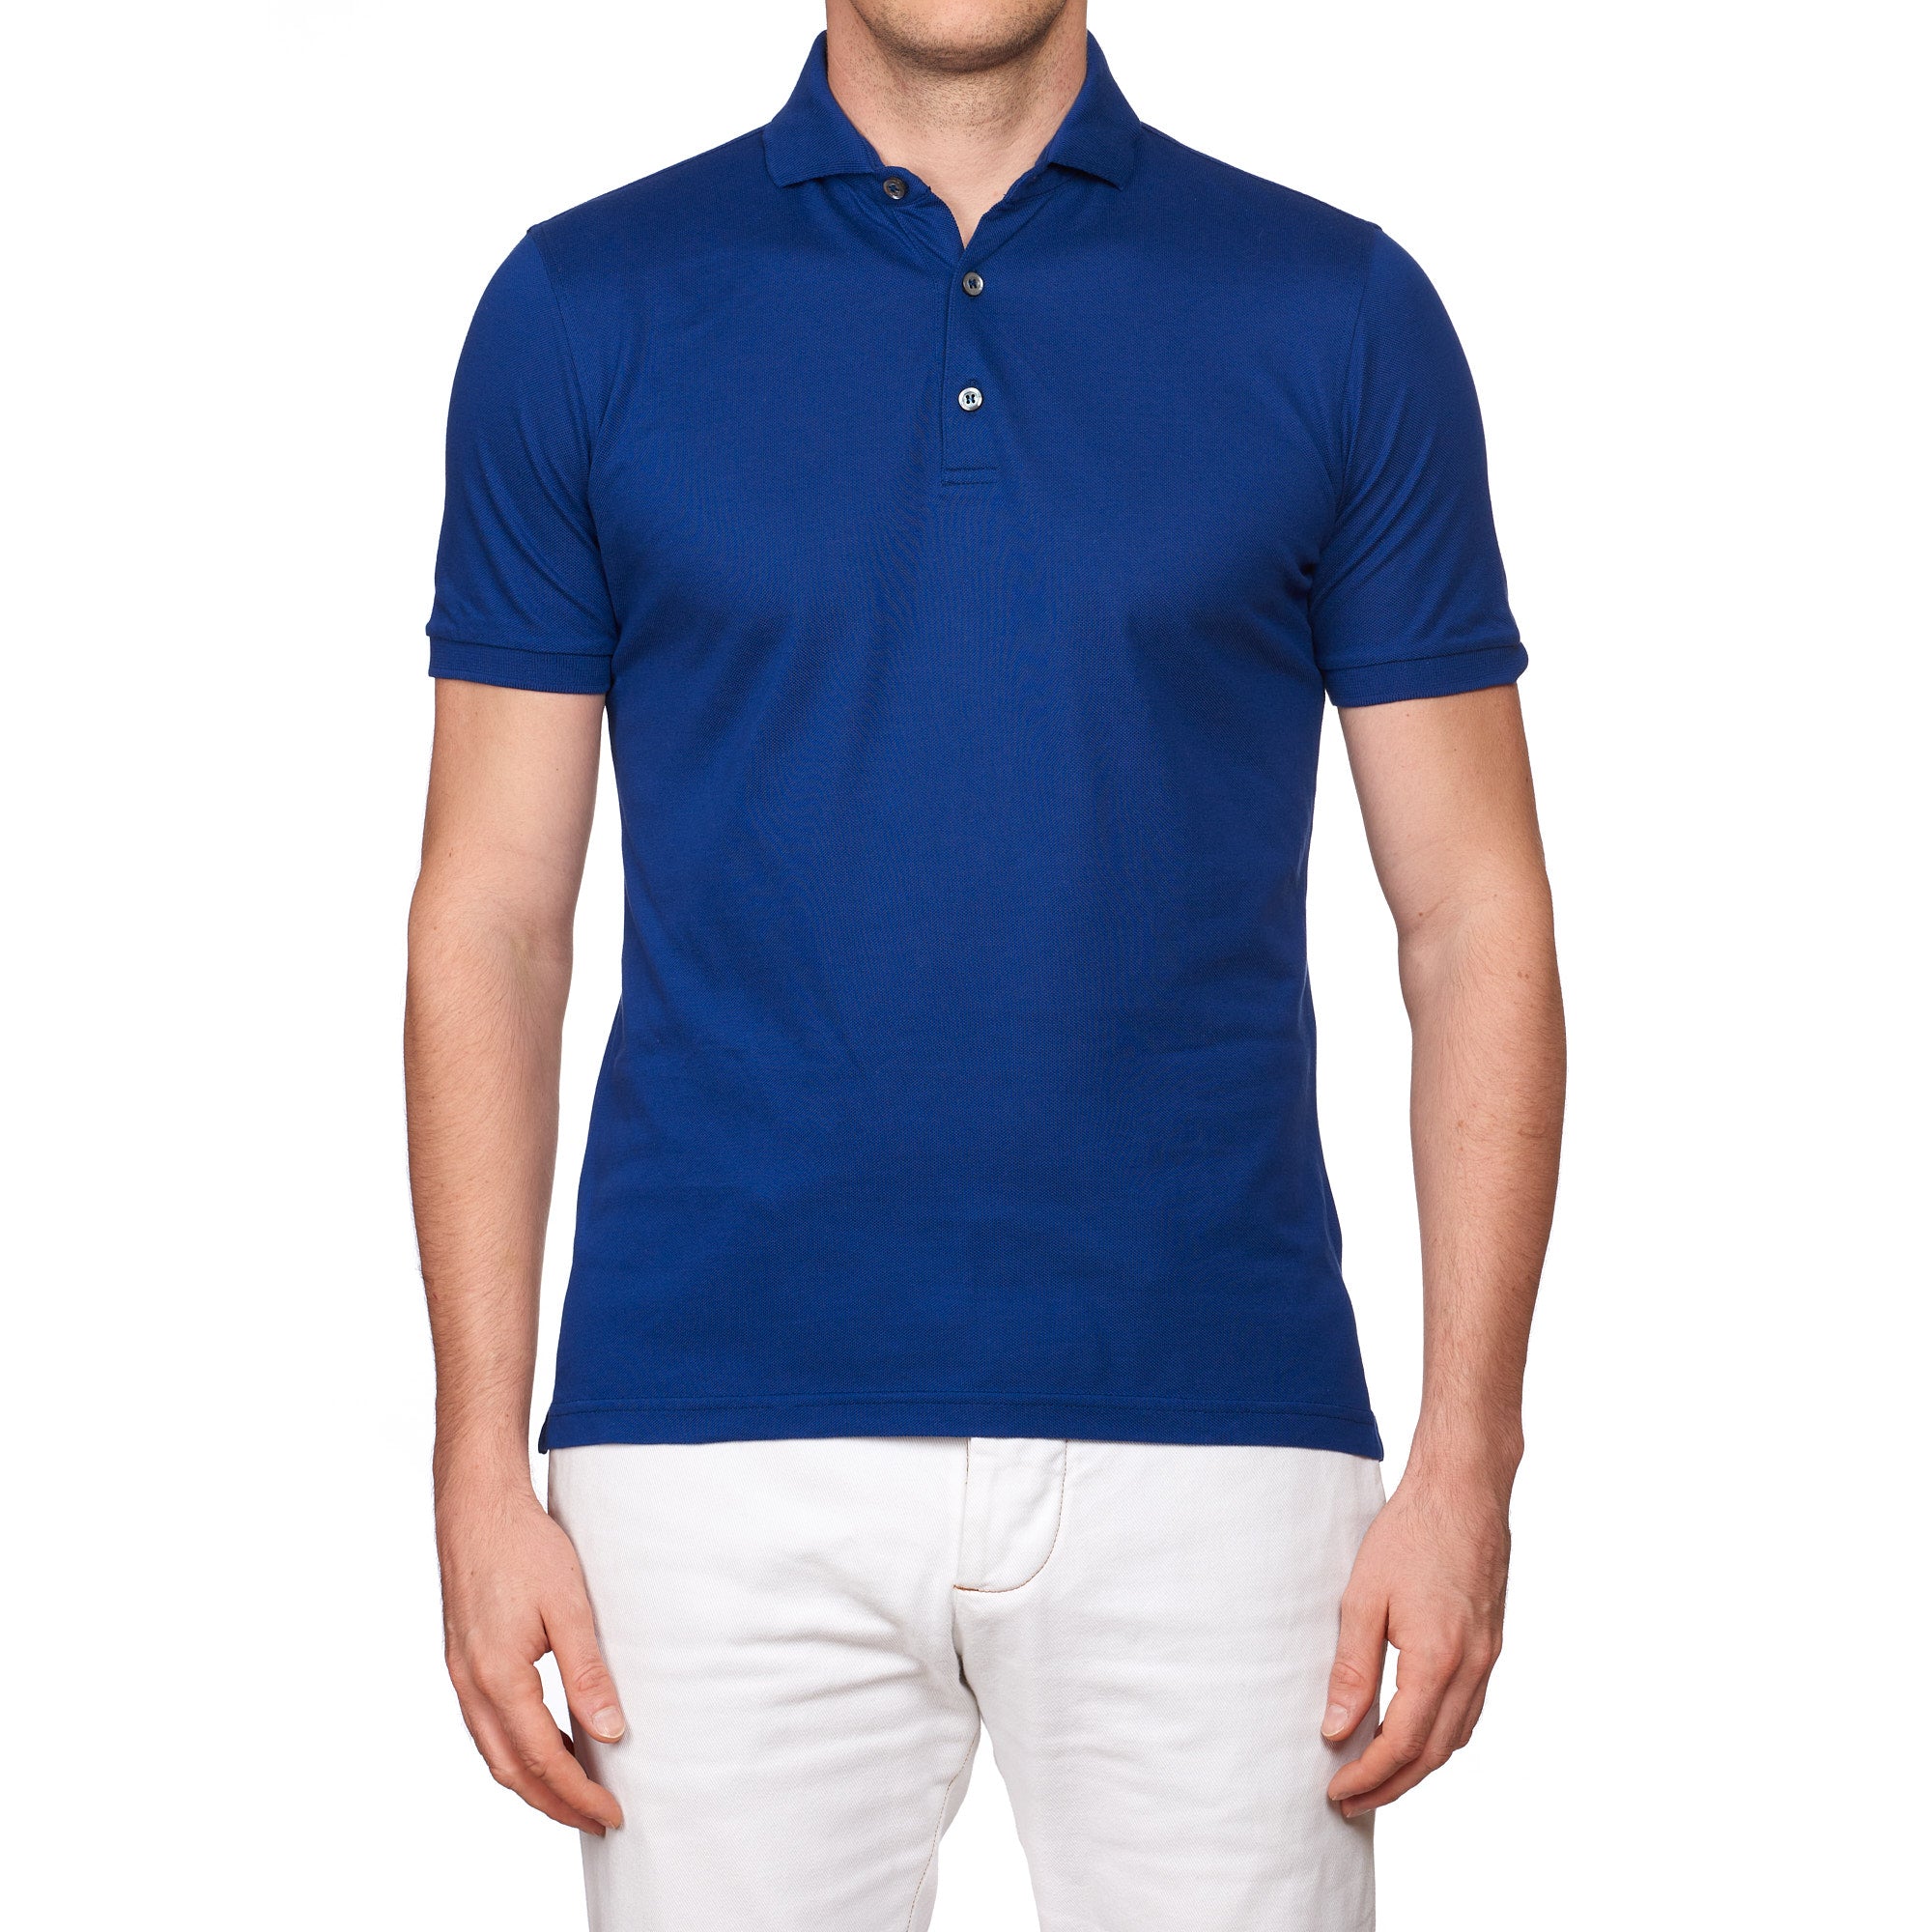 DALMINE 1952 Solid Royal Blue Giza 45 Cotton Short Sleeve Polo Shirt EU 50 NEW US M